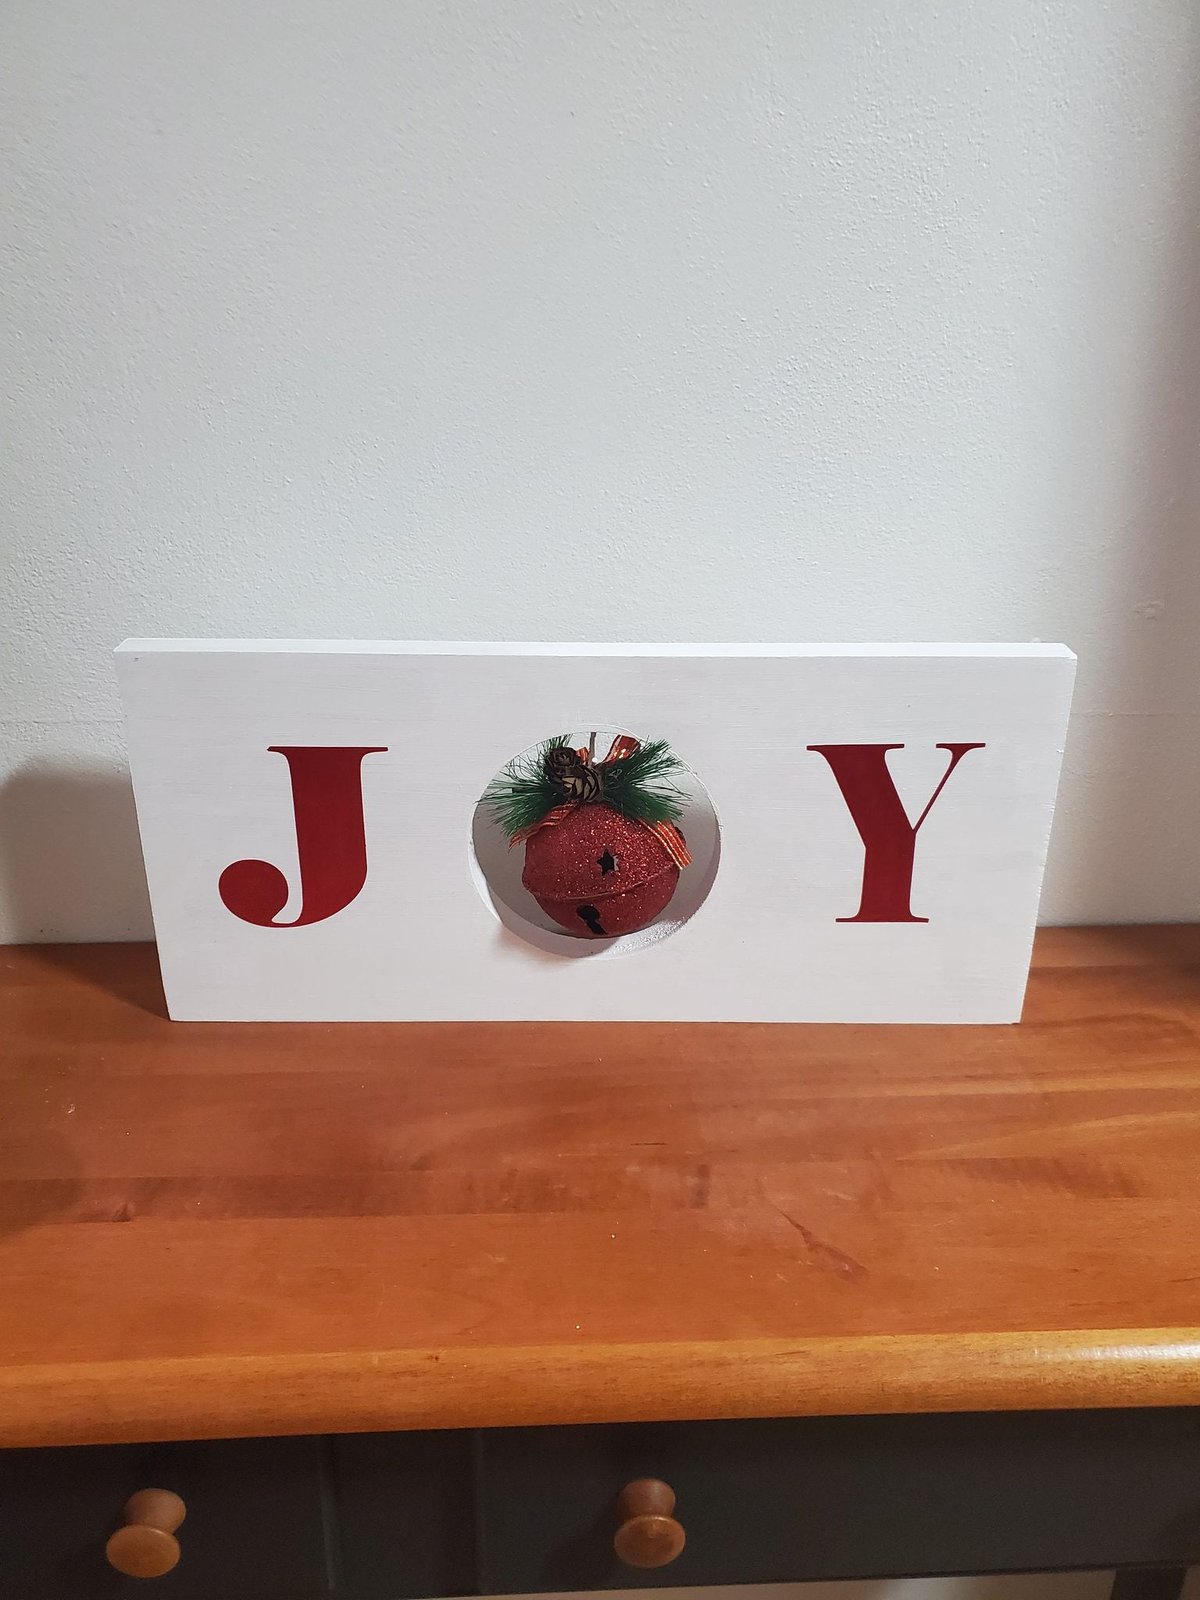 Joy Christmas Sign Made Cricut